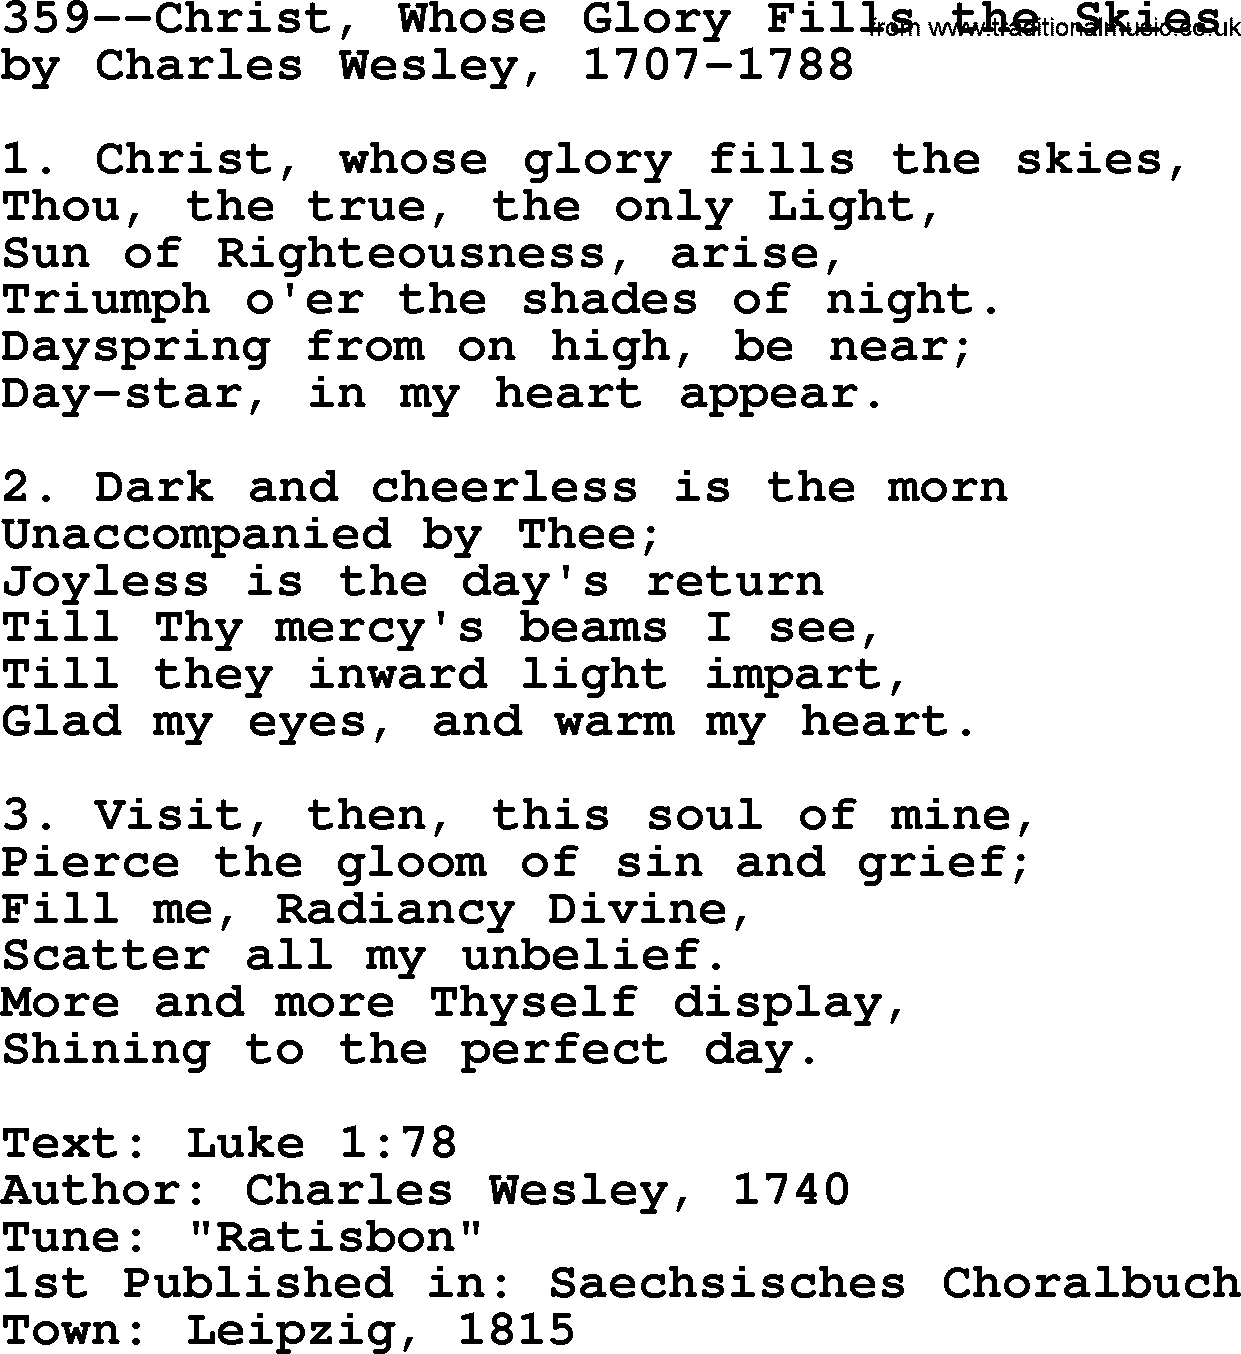 Lutheran Hymn: 359--Christ, Whose Glory Fills the Skies.txt lyrics with PDF